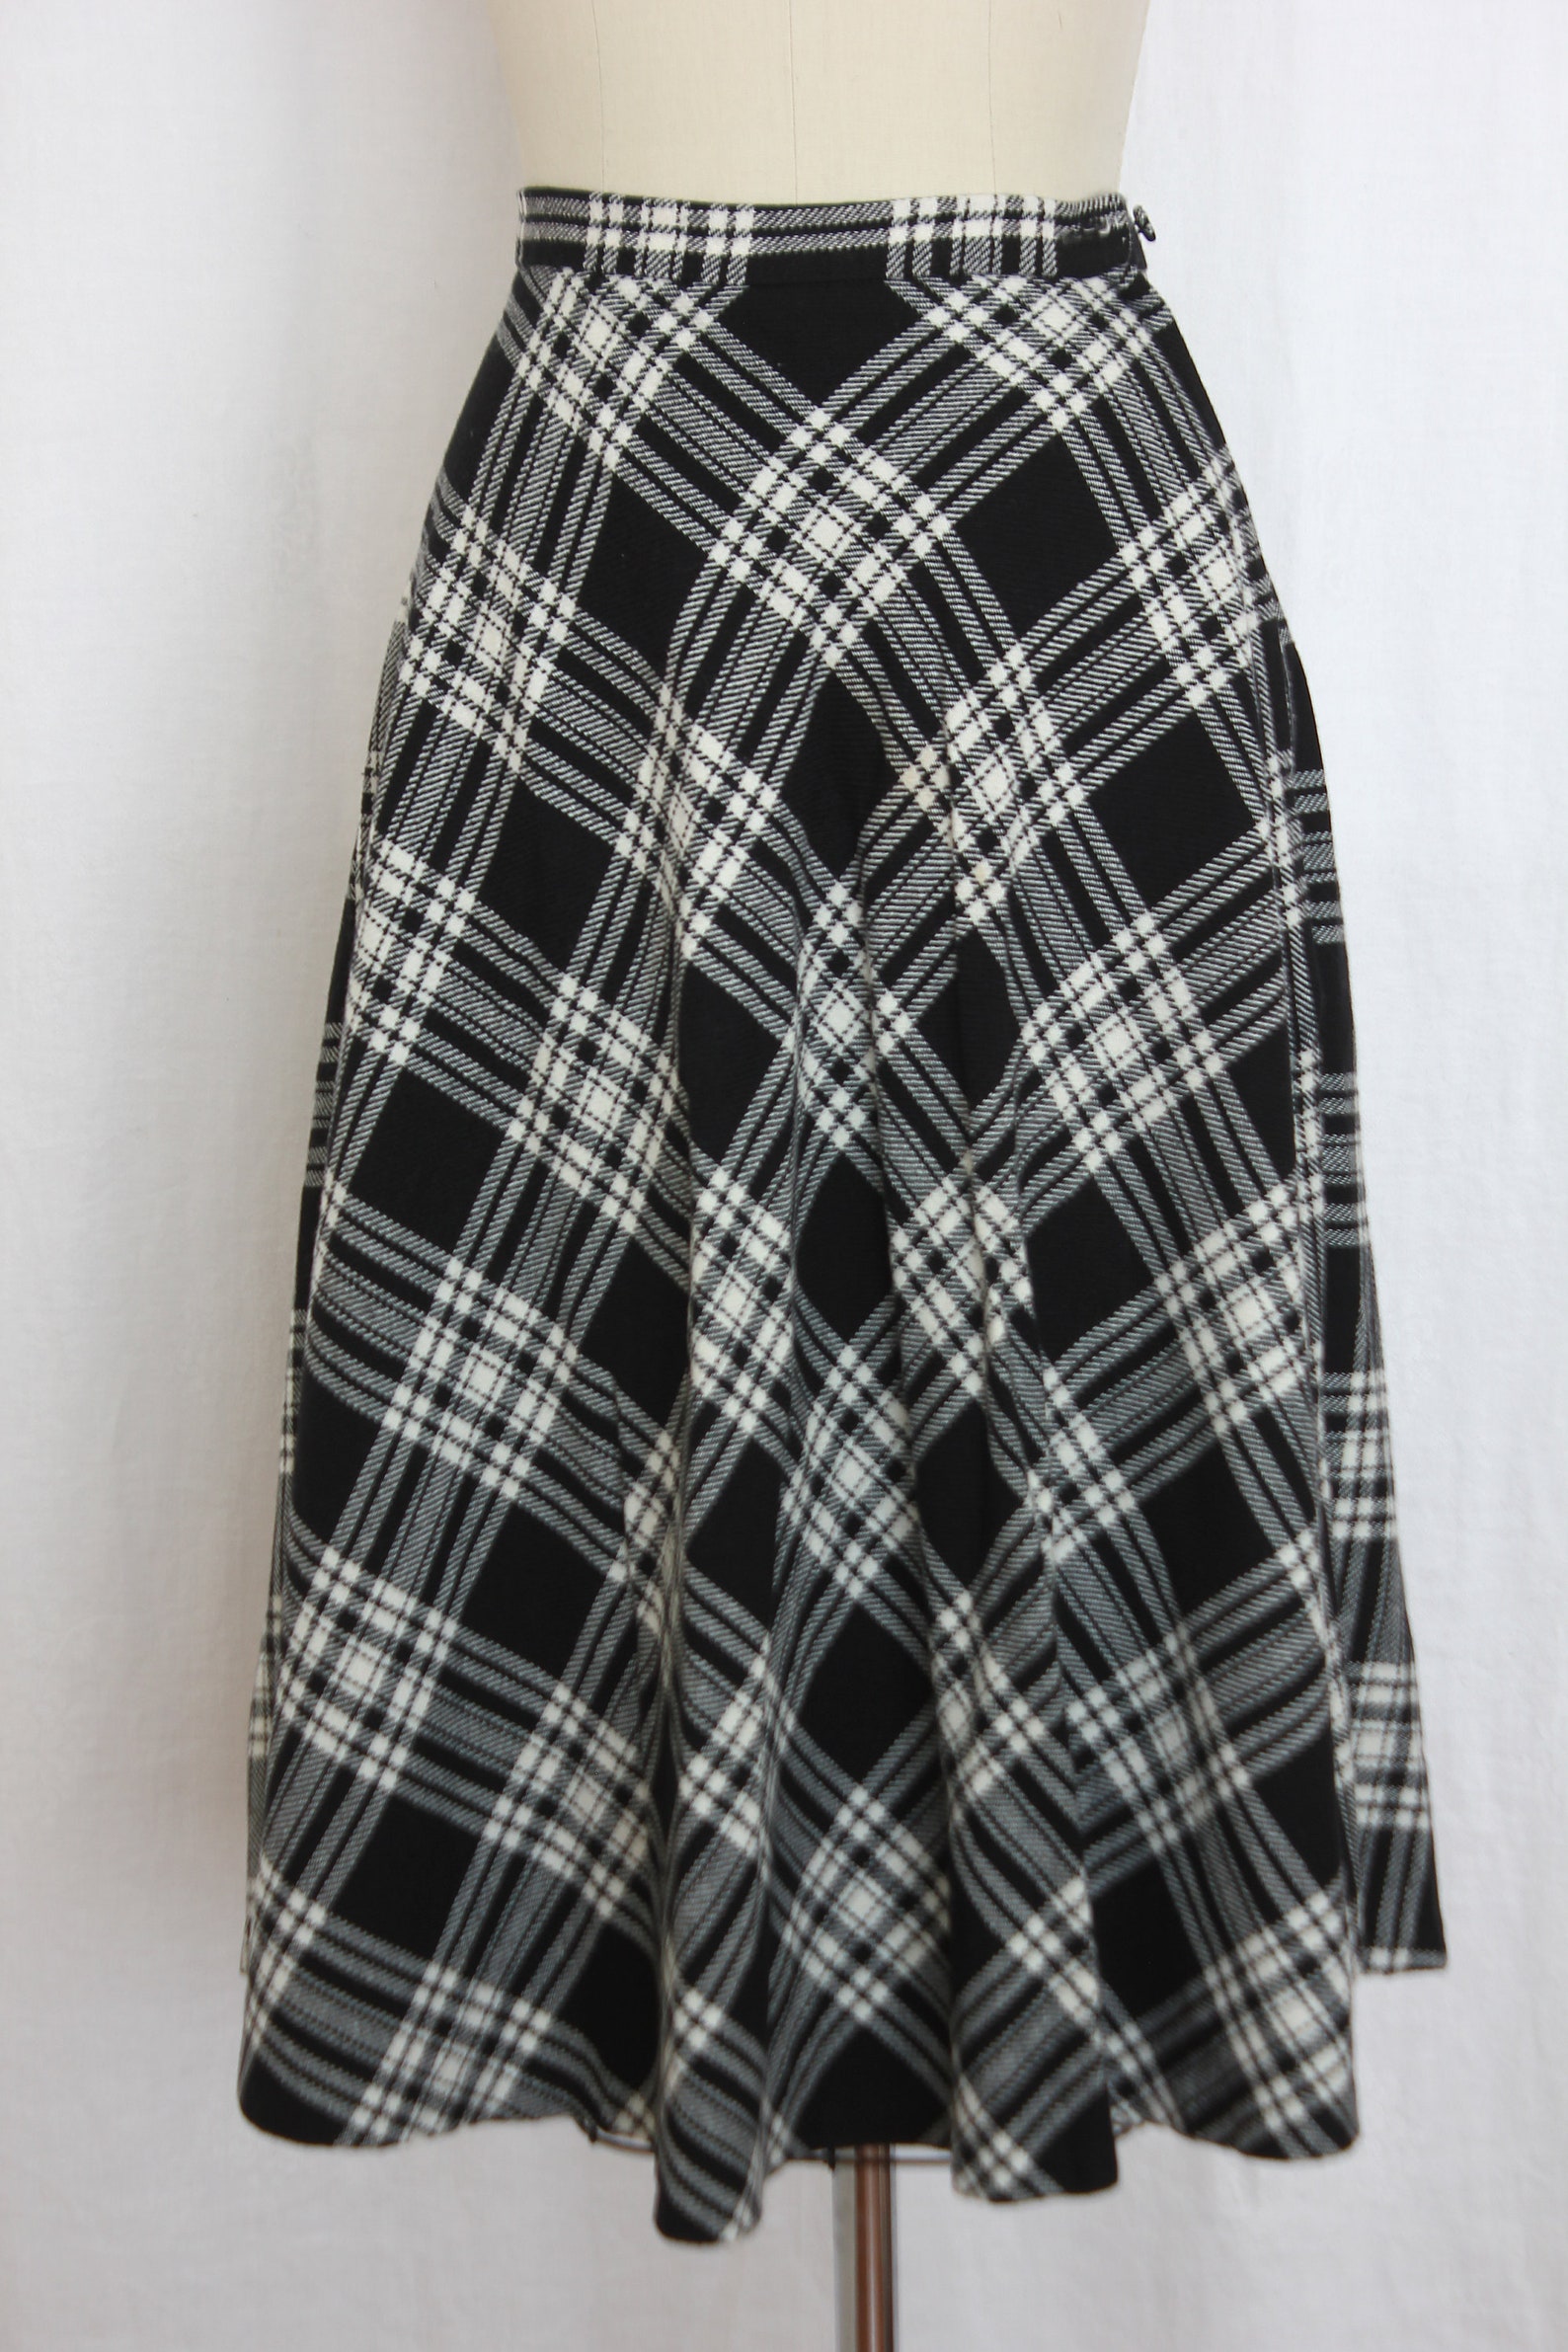 Vintage black and white wool tartan skirt | Etsy